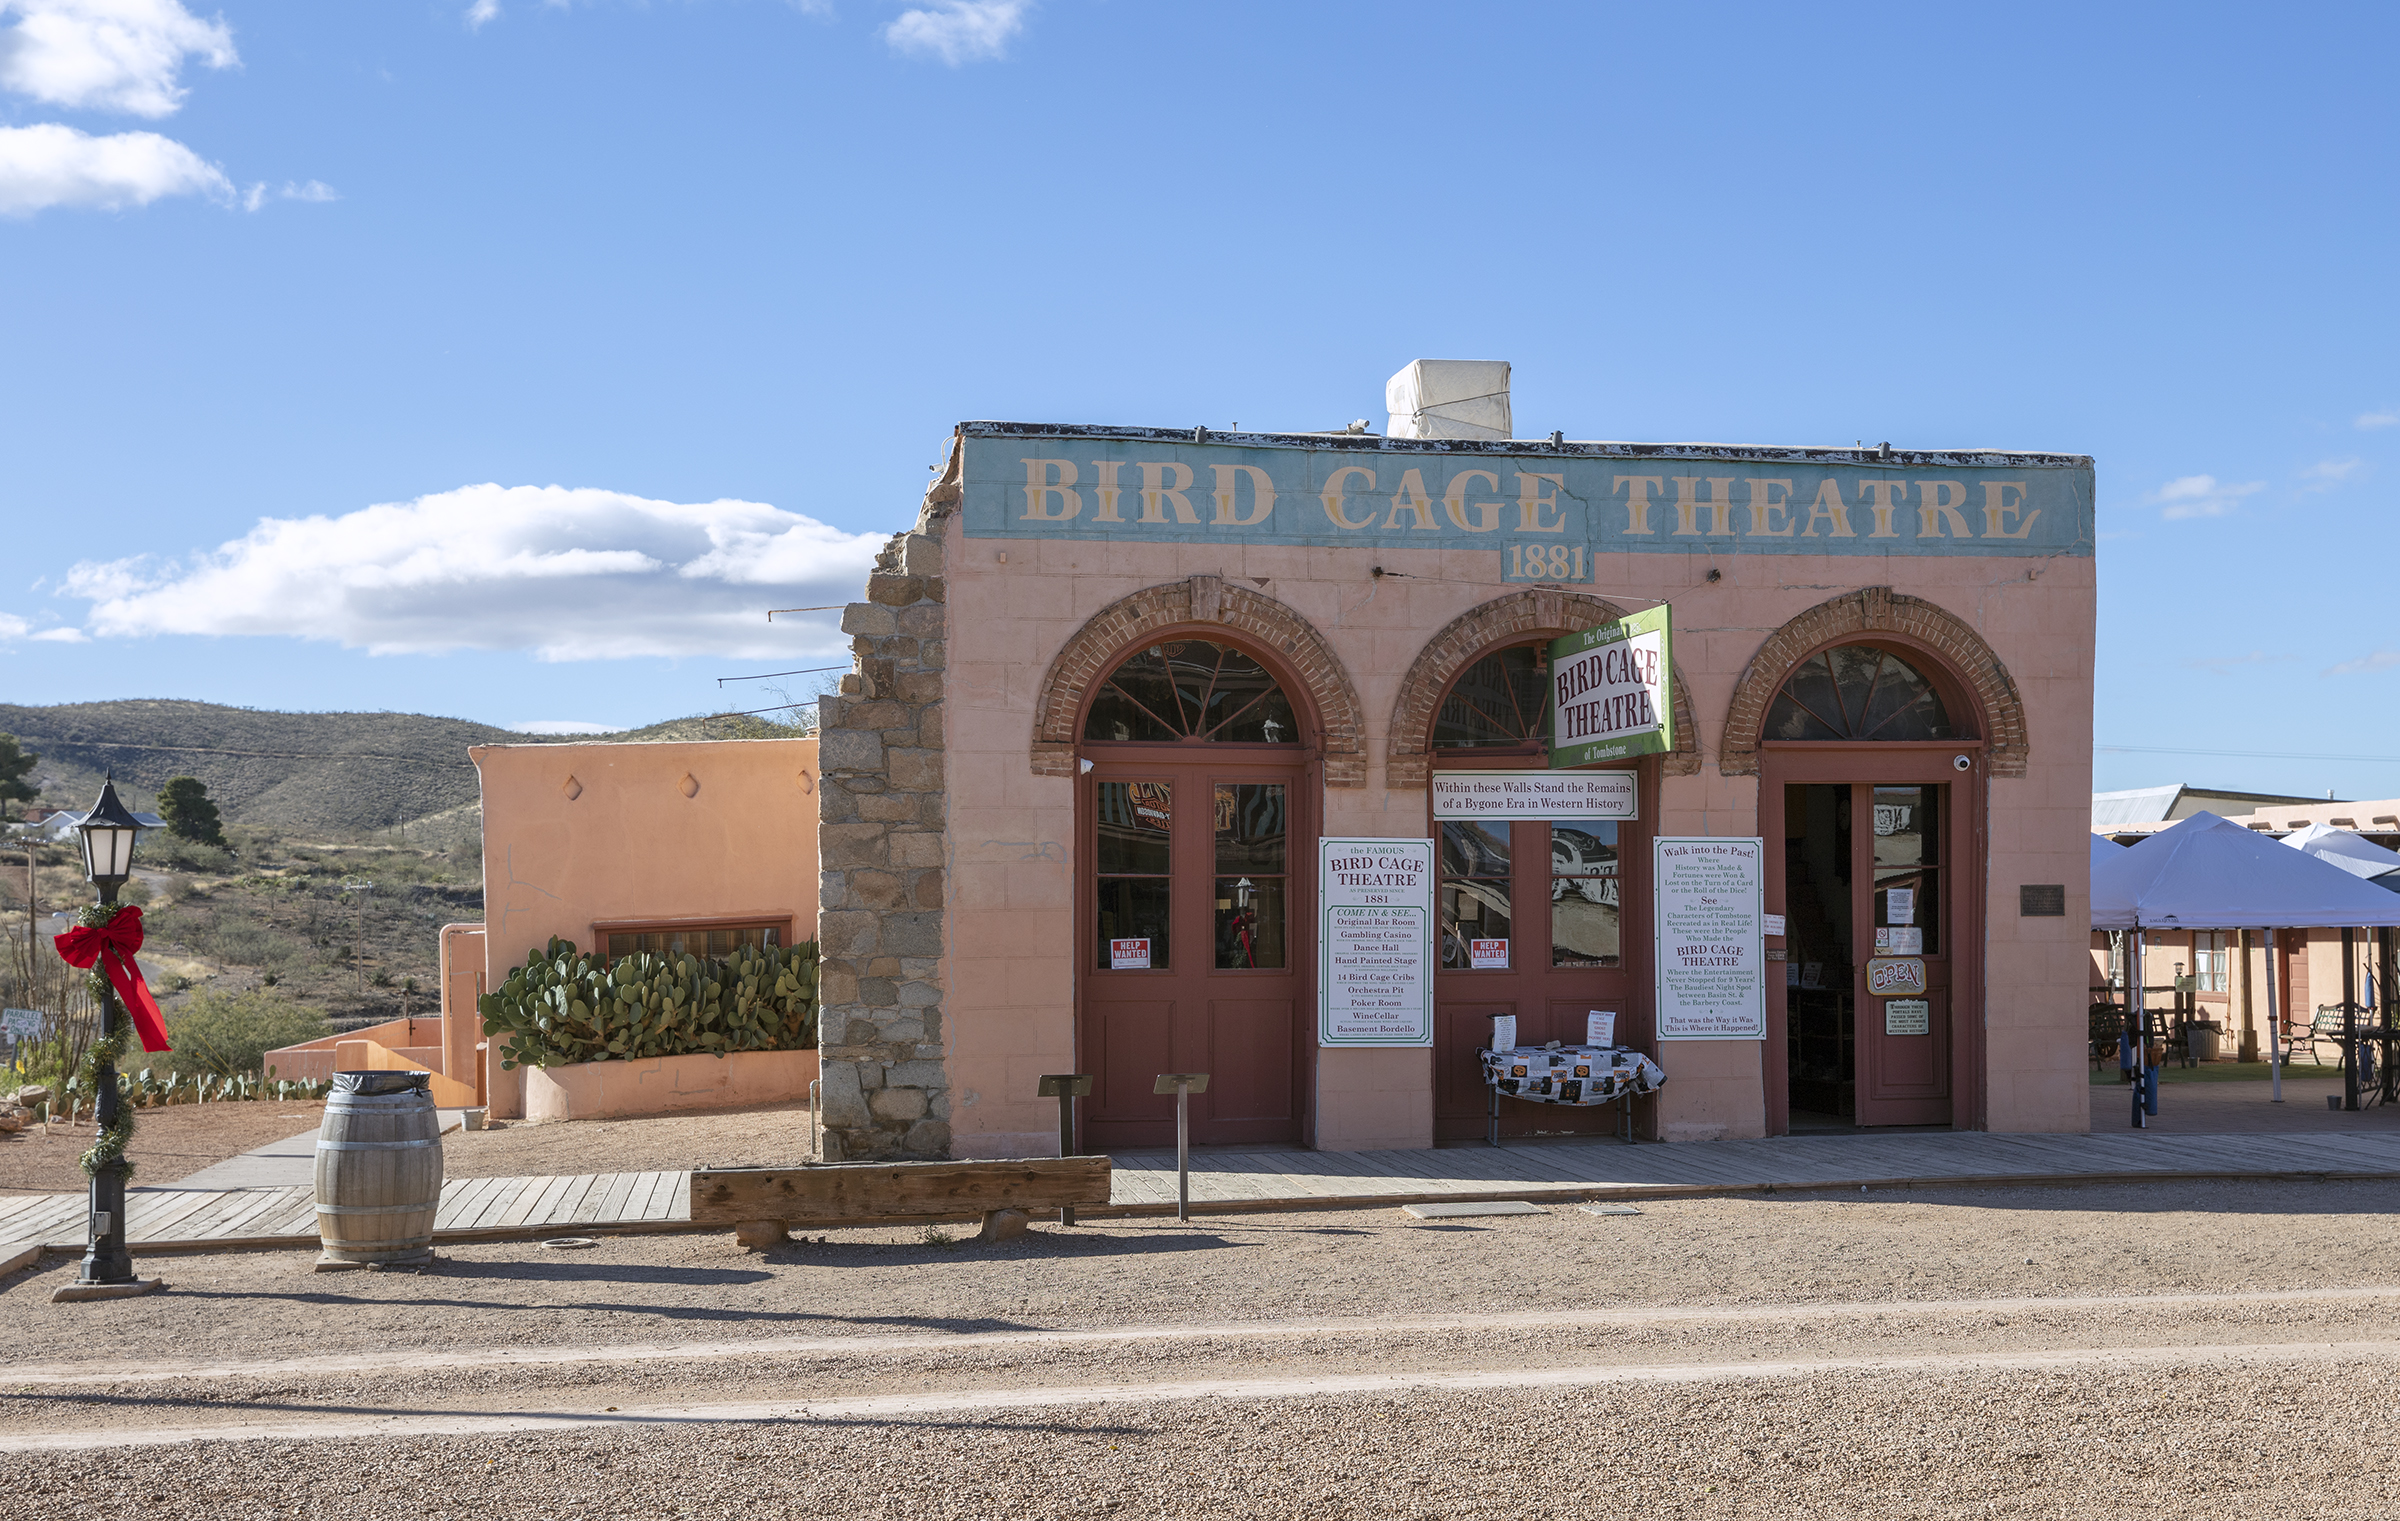 The Bird Cage Theatre